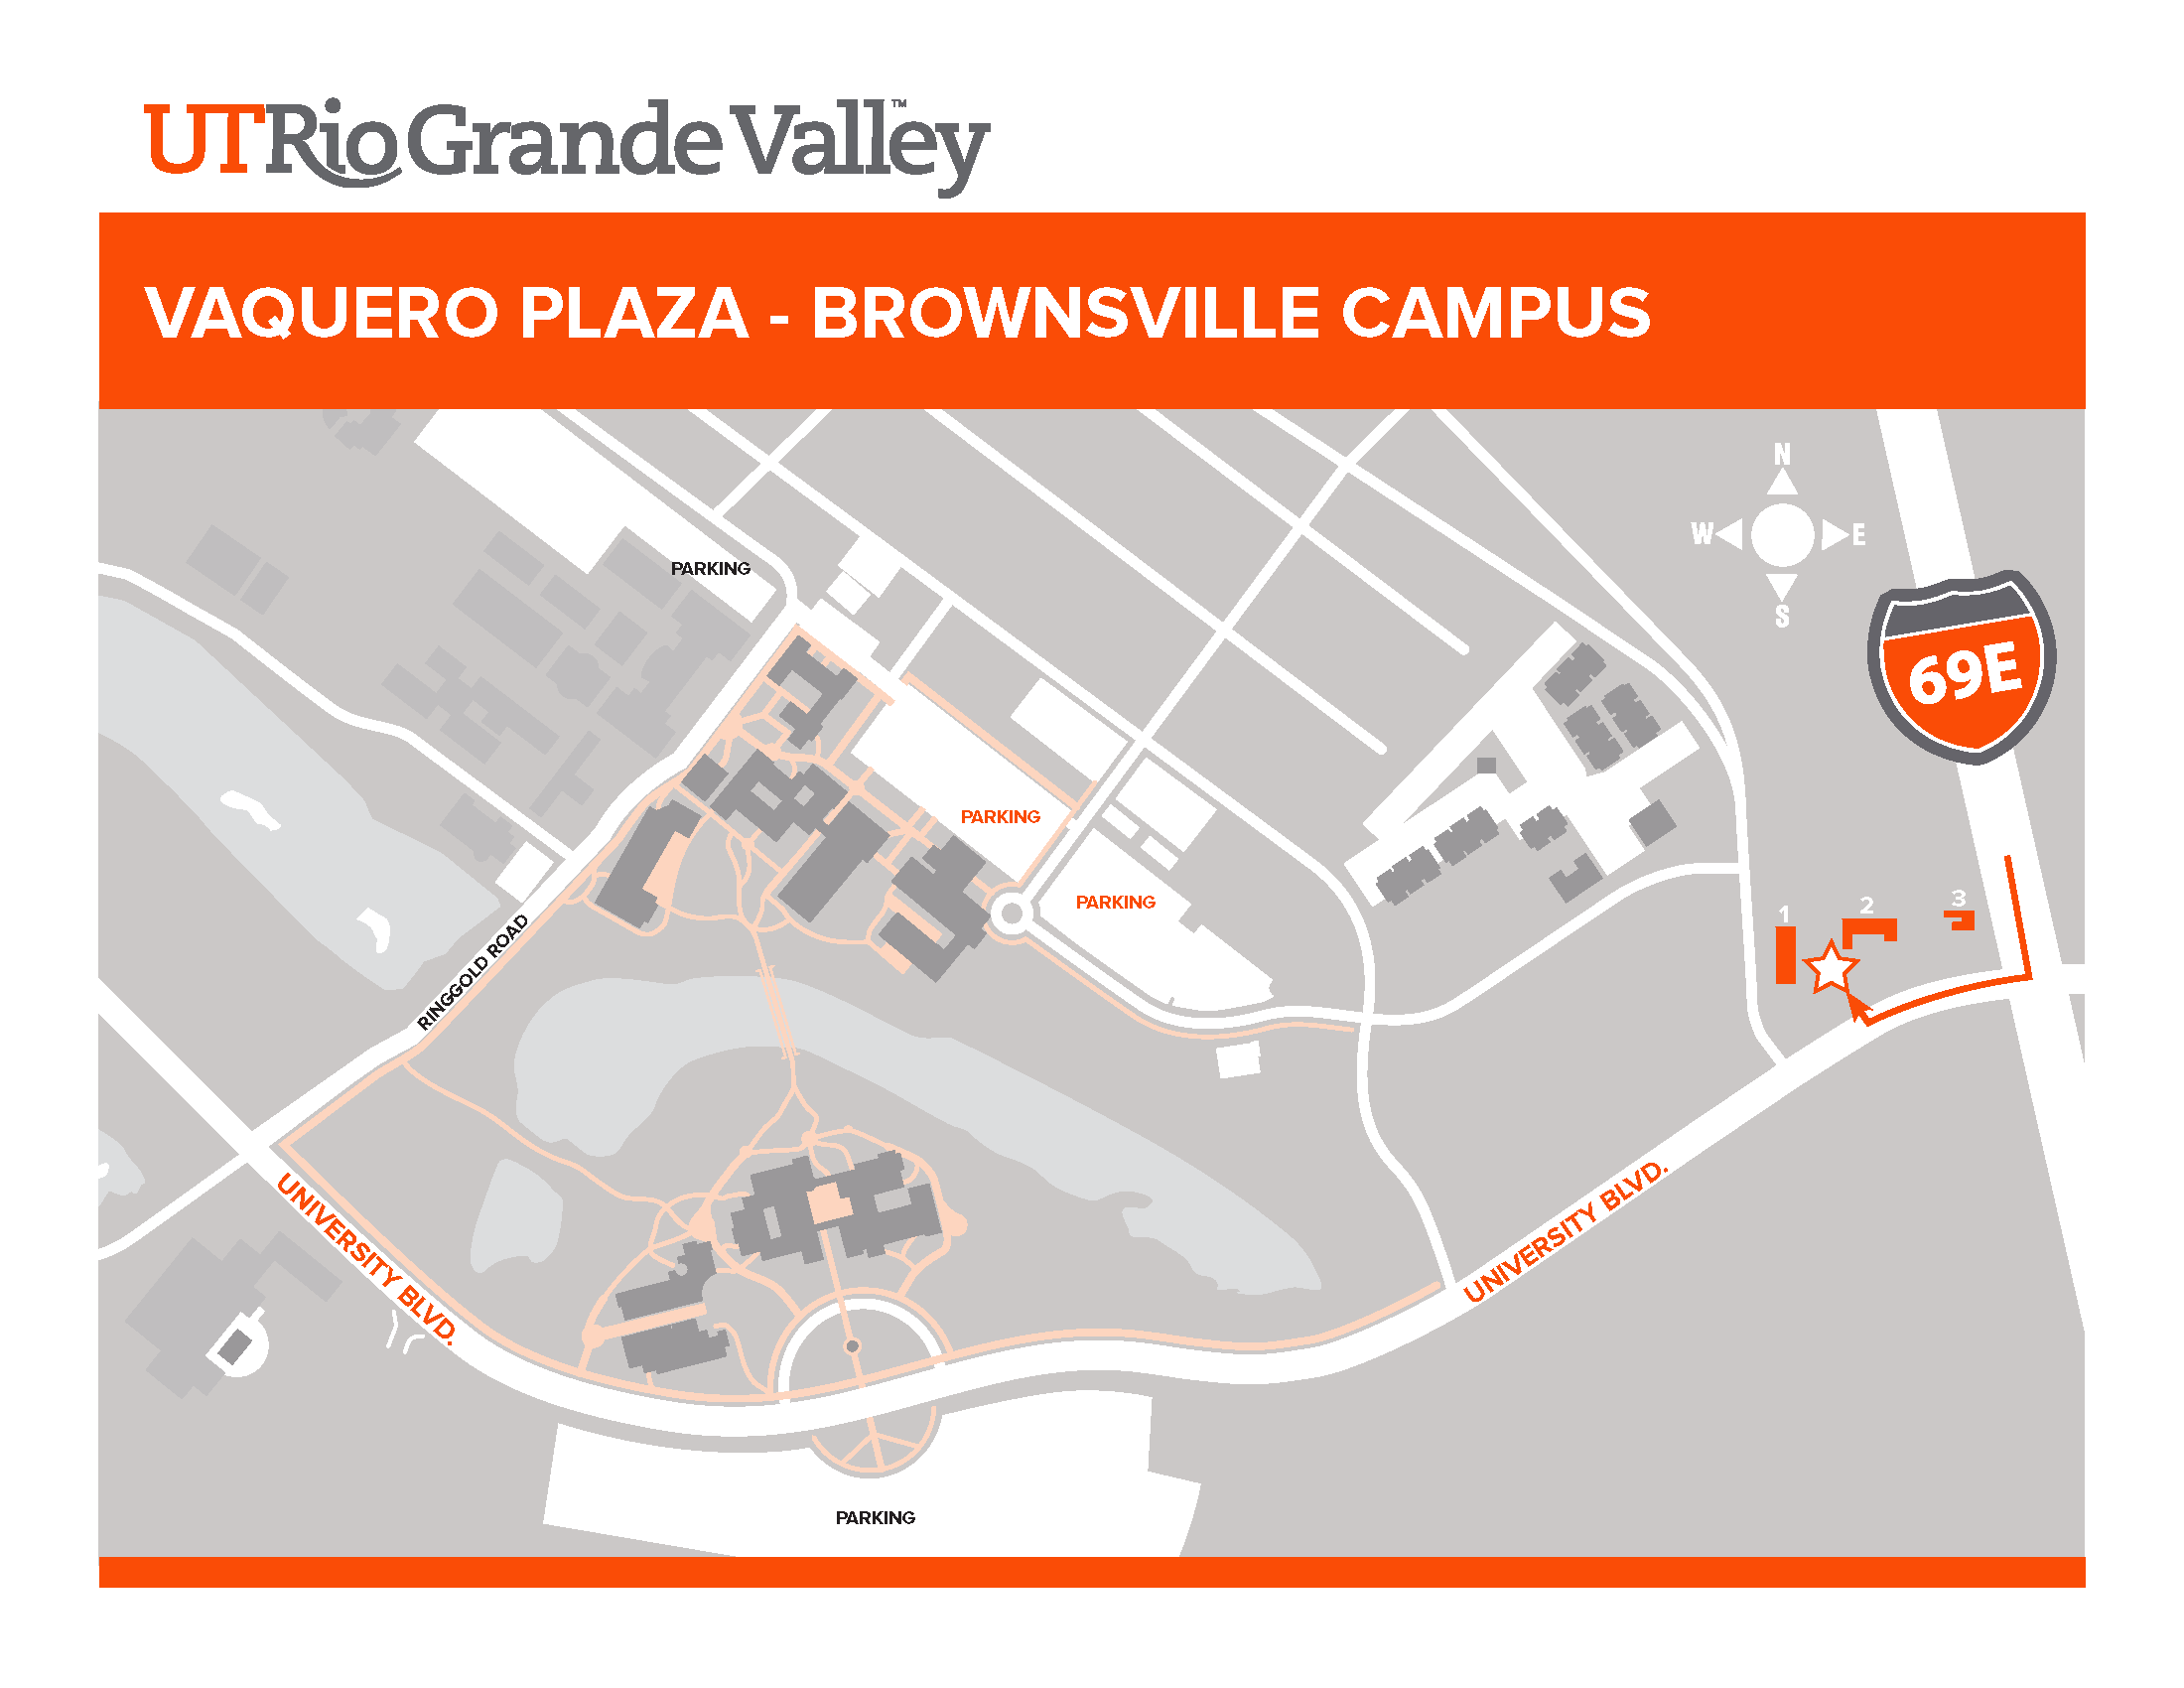 Vaquero Plaza - Brownsville Campus